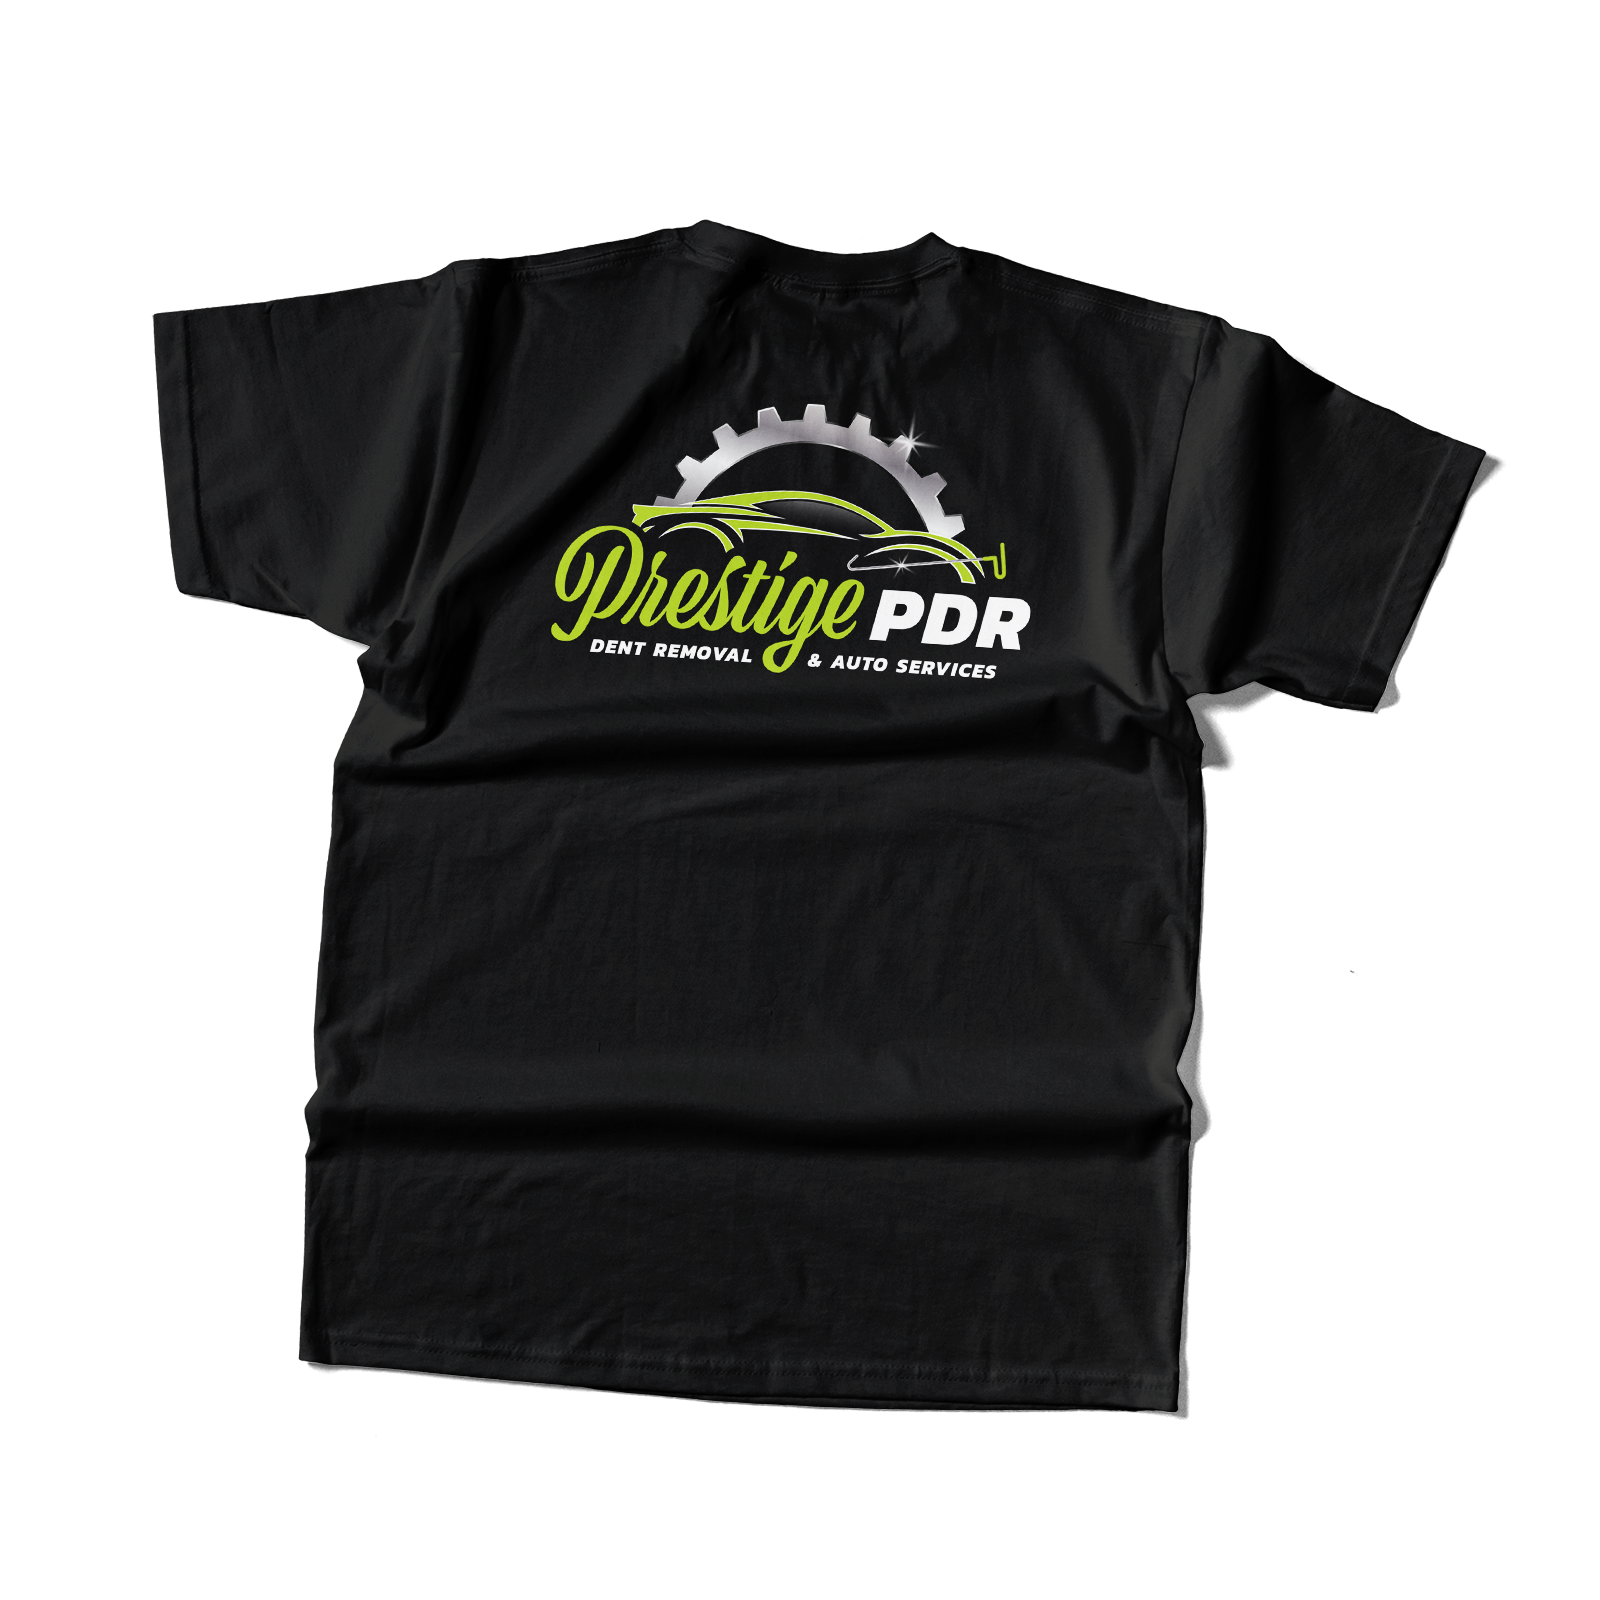 Prestige PDR T-Shirt